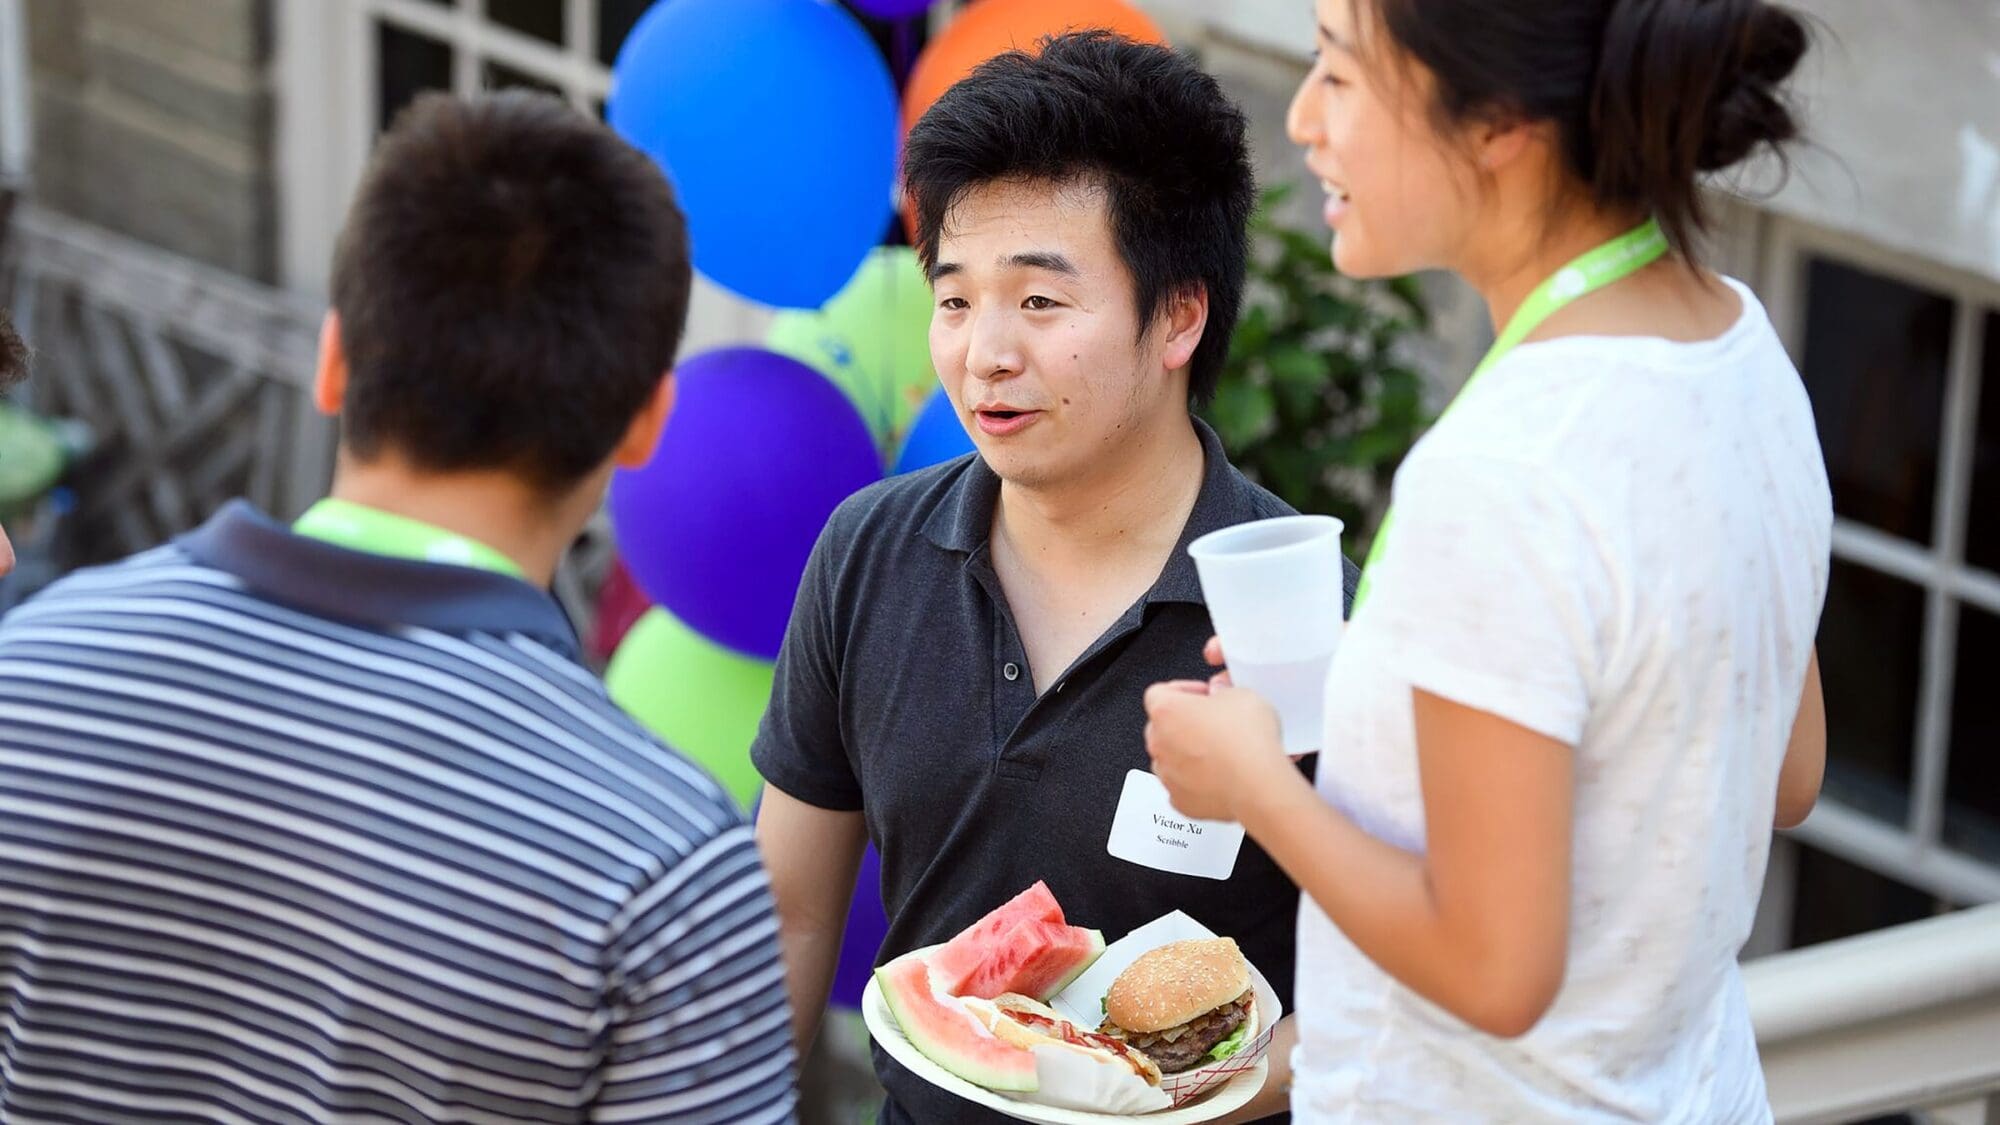 Students talk and eat at barbecue picnic